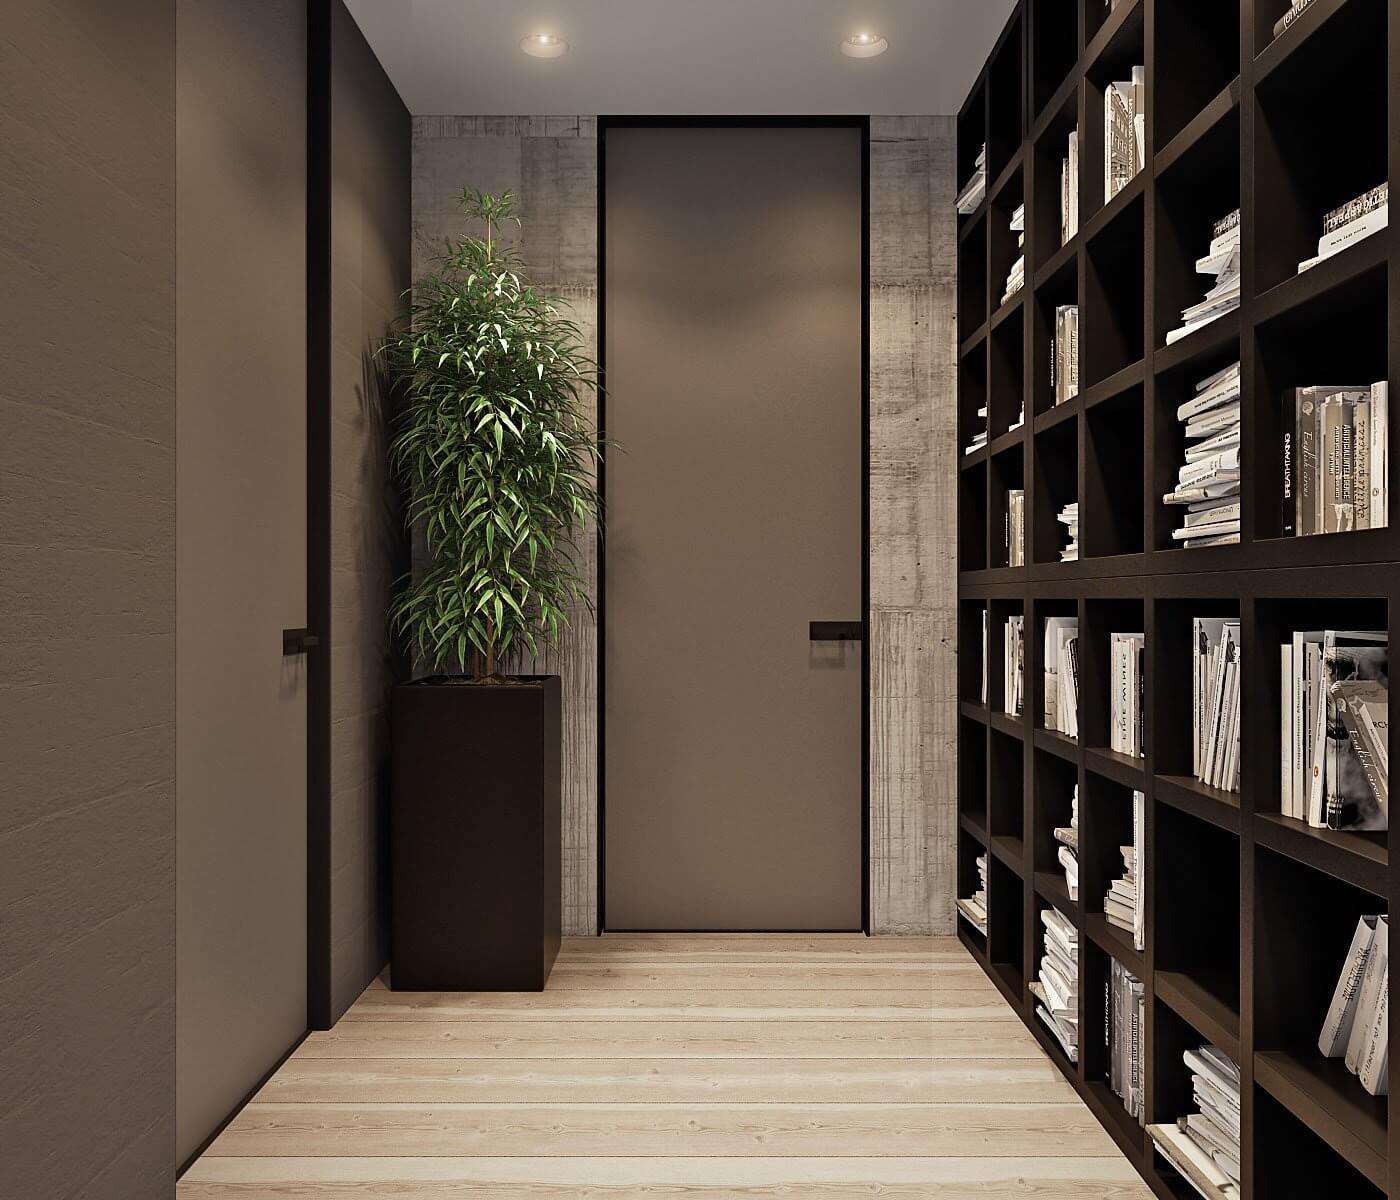 Stylish cozy apartment in italy entrance - cgi visualization